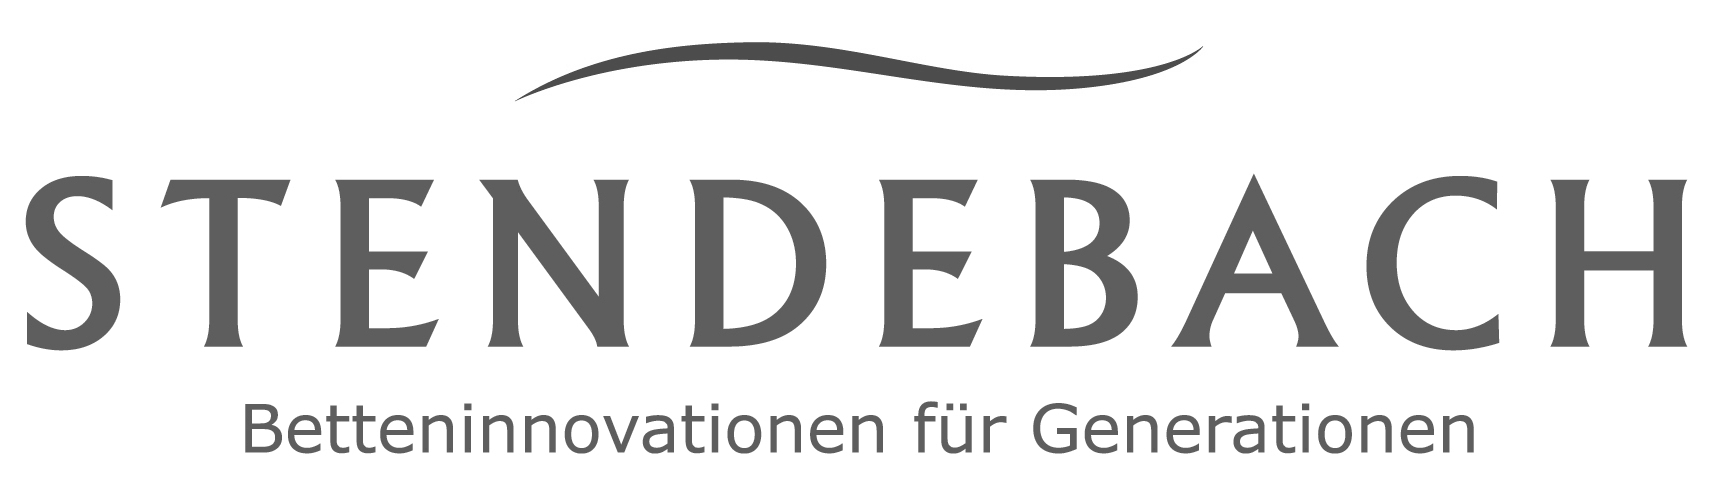 stendebach-firma-logo-2016 - Schlaf-Studio Siegert